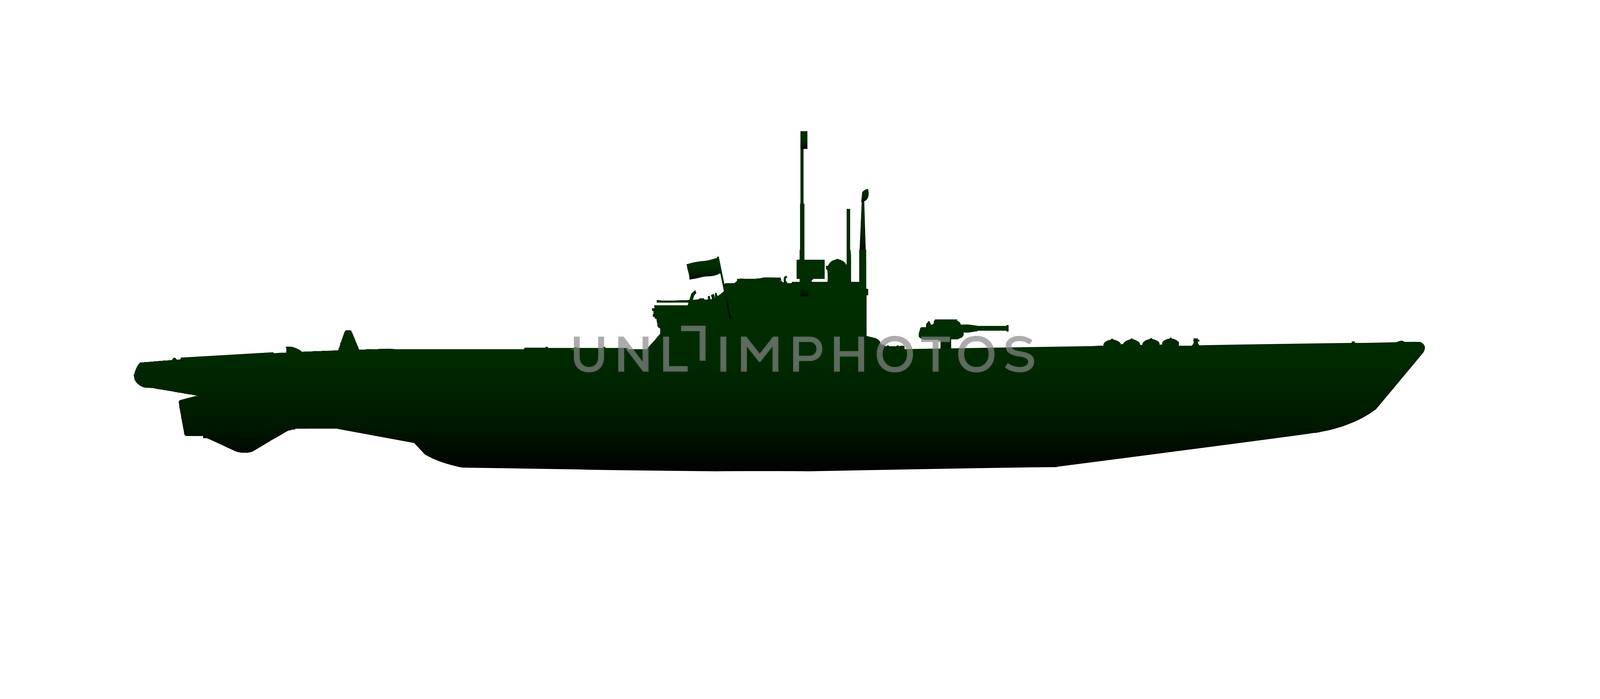 A typical German World War 2 U boat submarine